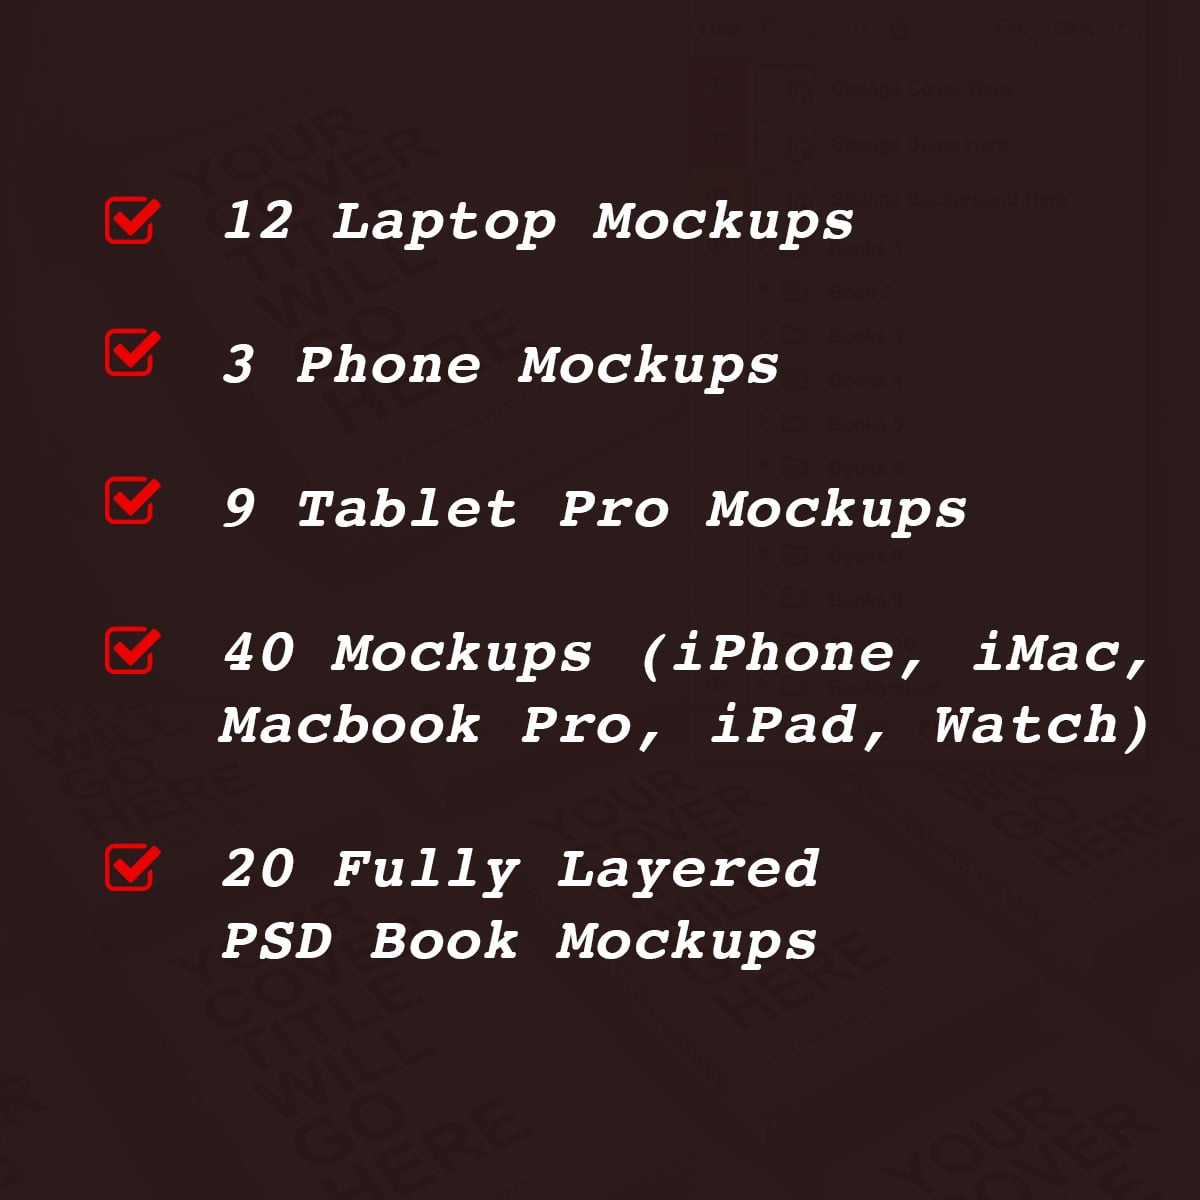 Apple Device Mockups: PSD Mockups 2021 cover image.